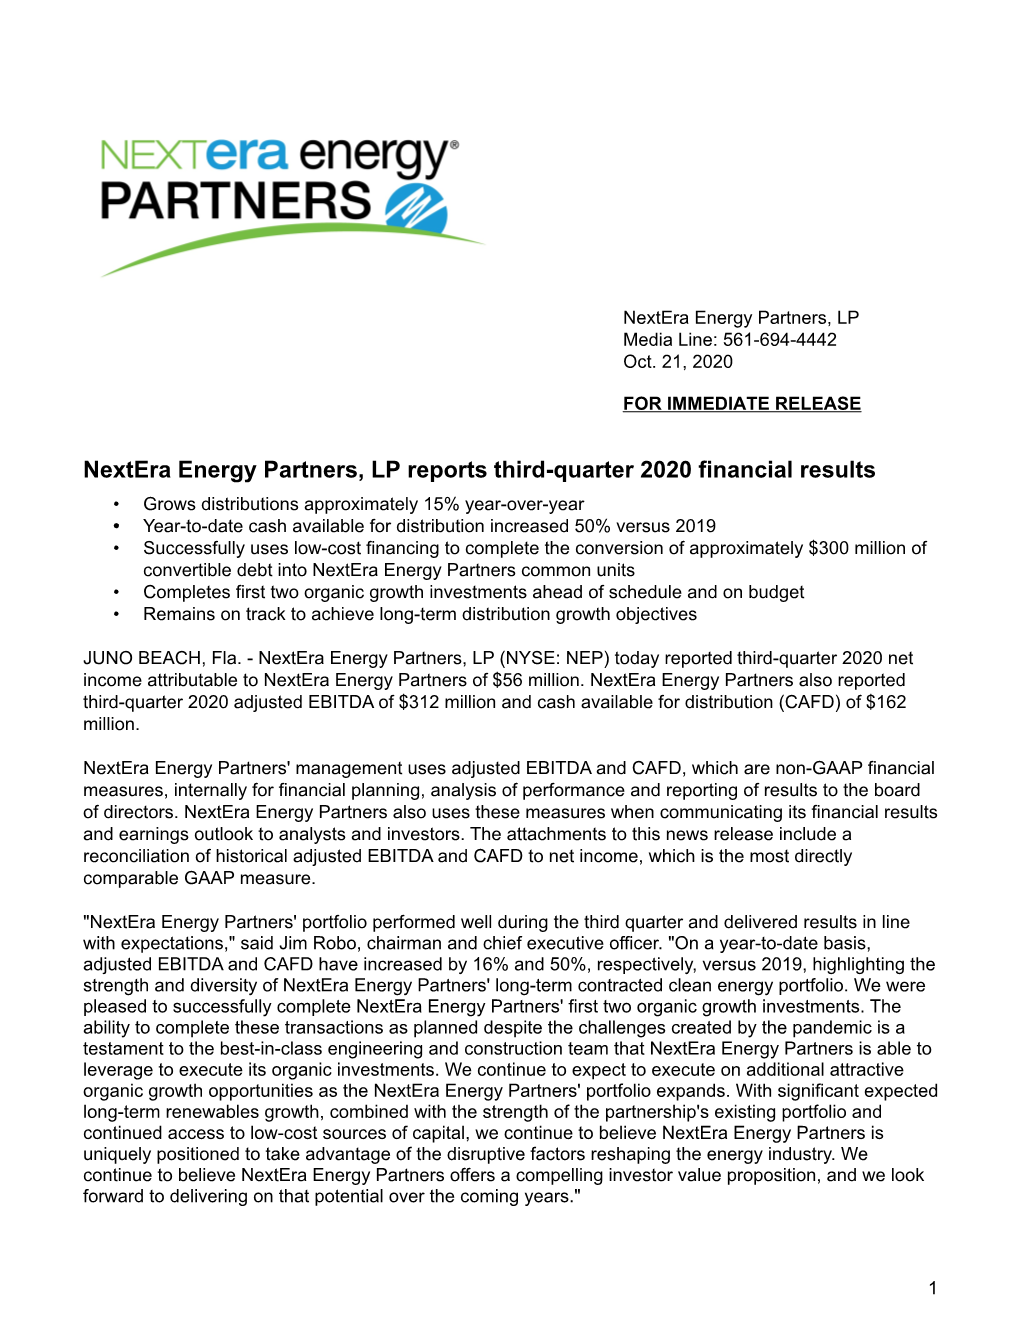 Nextera Energy Partners, LP Reports Third-Quarter 2020 Financial Results